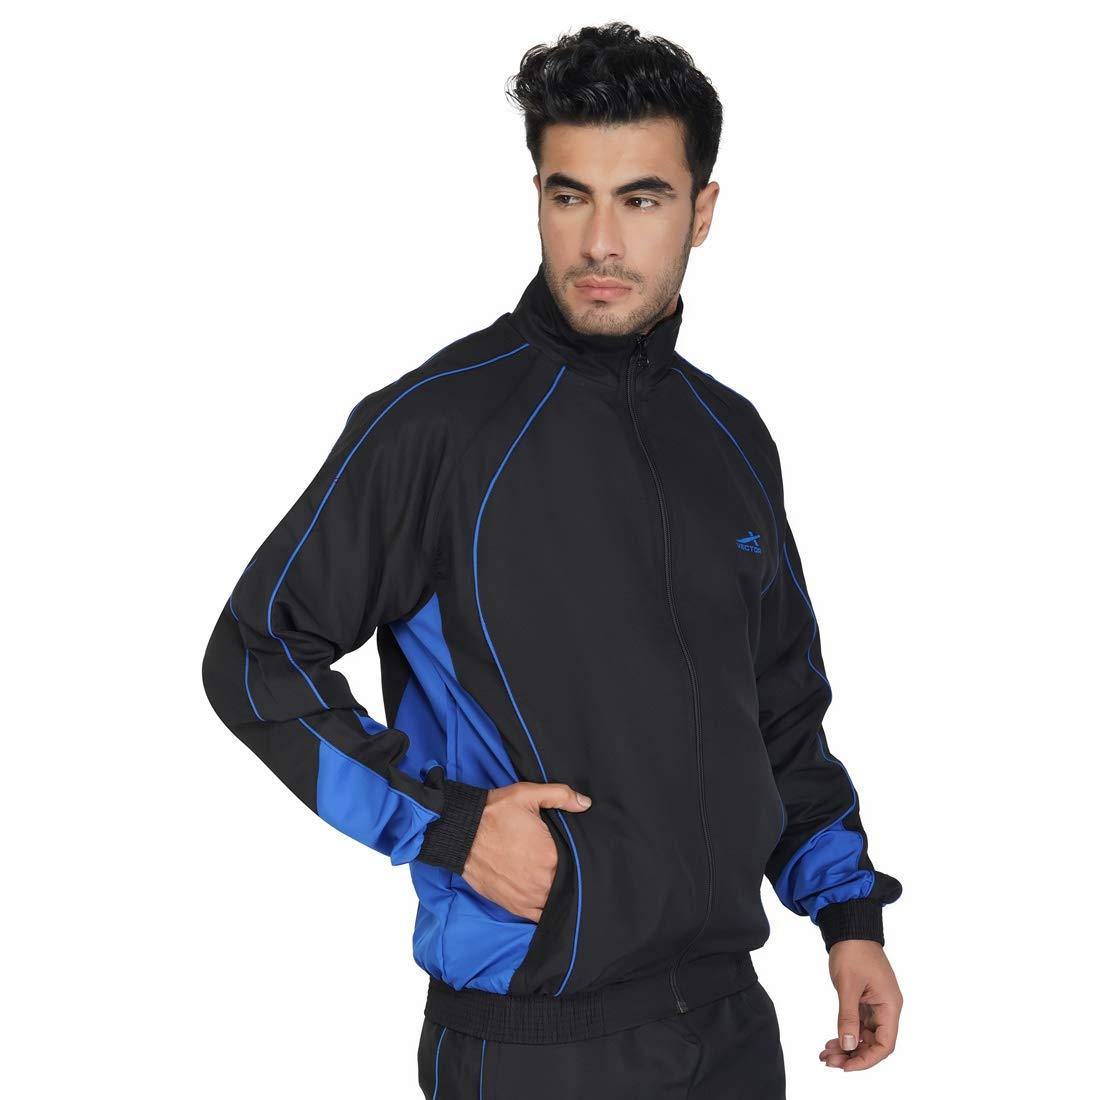 Vector X Synergy Track Suit for Men's, Navy - Best Price online Prokicksports.com